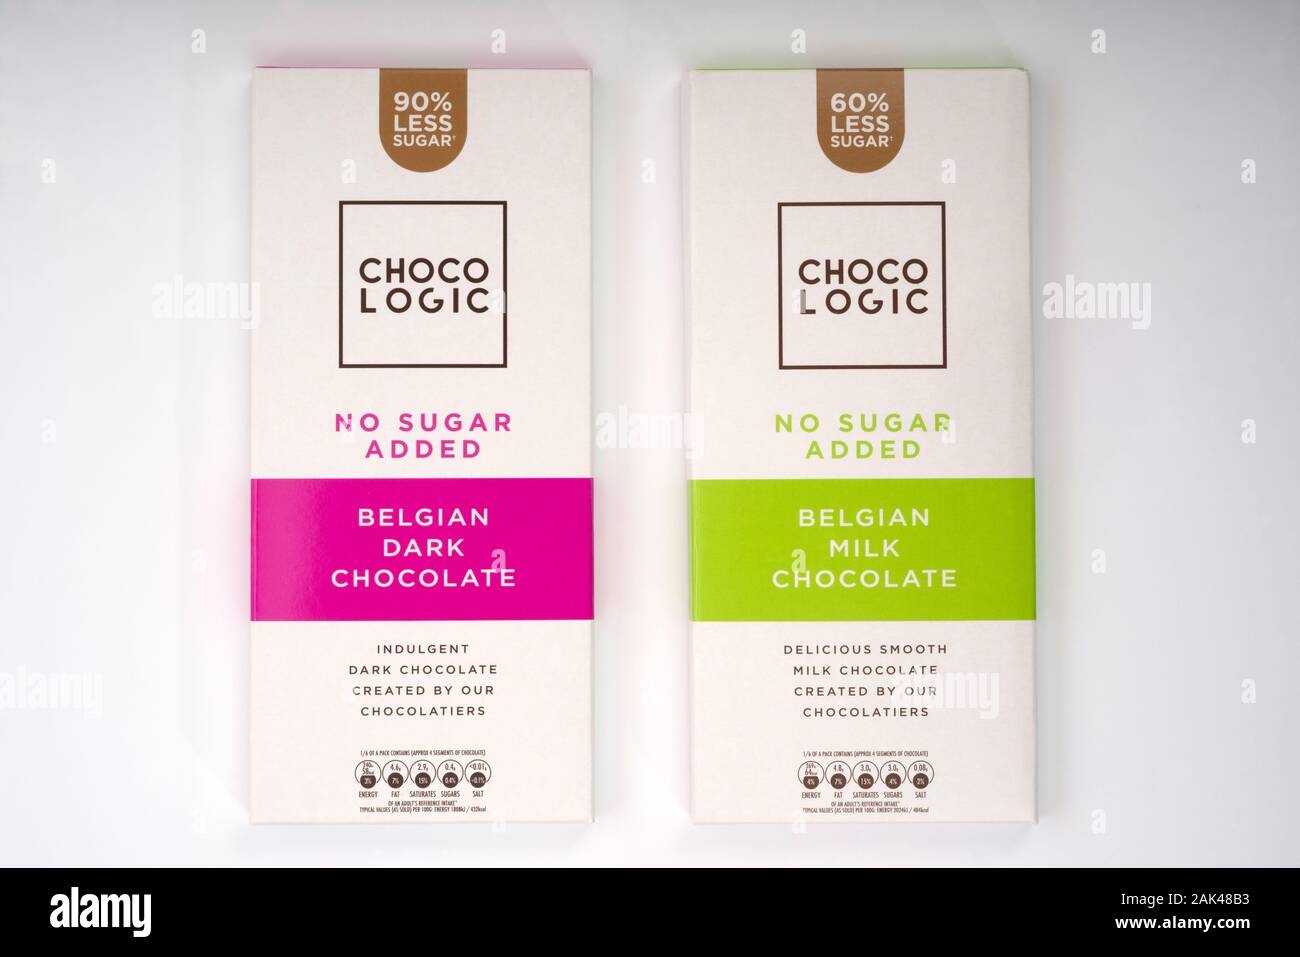 Choco Logik niedrigen Zucker Schokolade Stockfoto